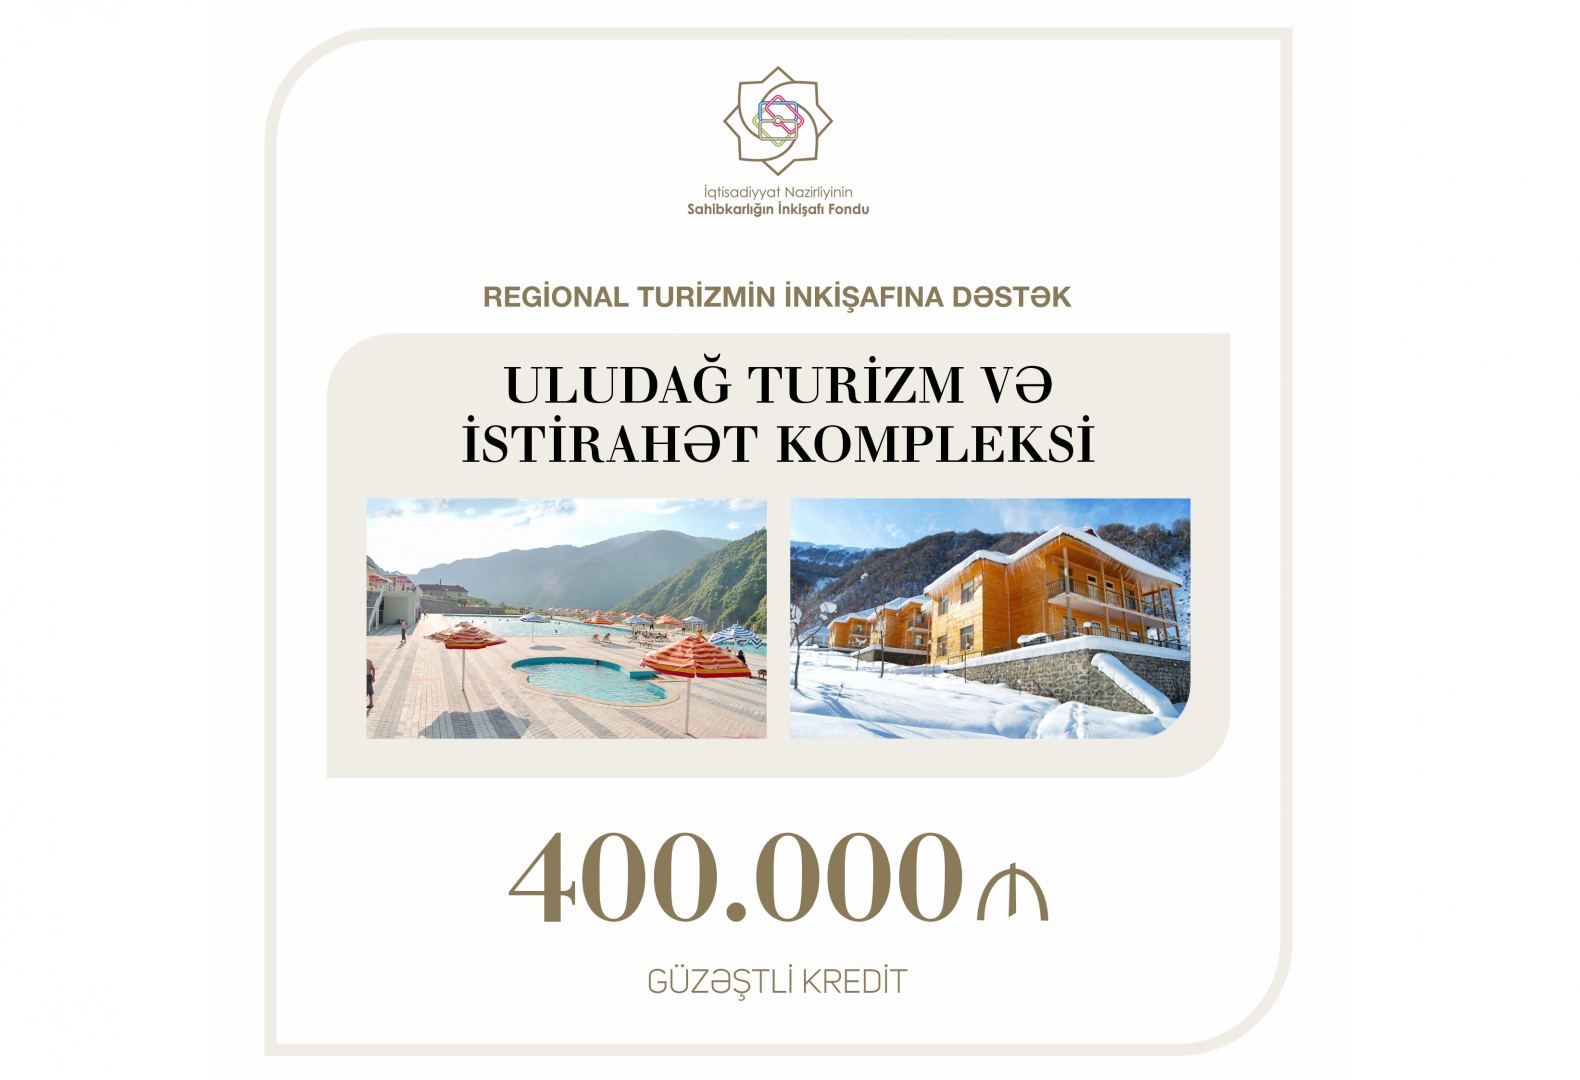 Azerbaijan Entrepreneurship Fund grants concessional loan for tourism dev't